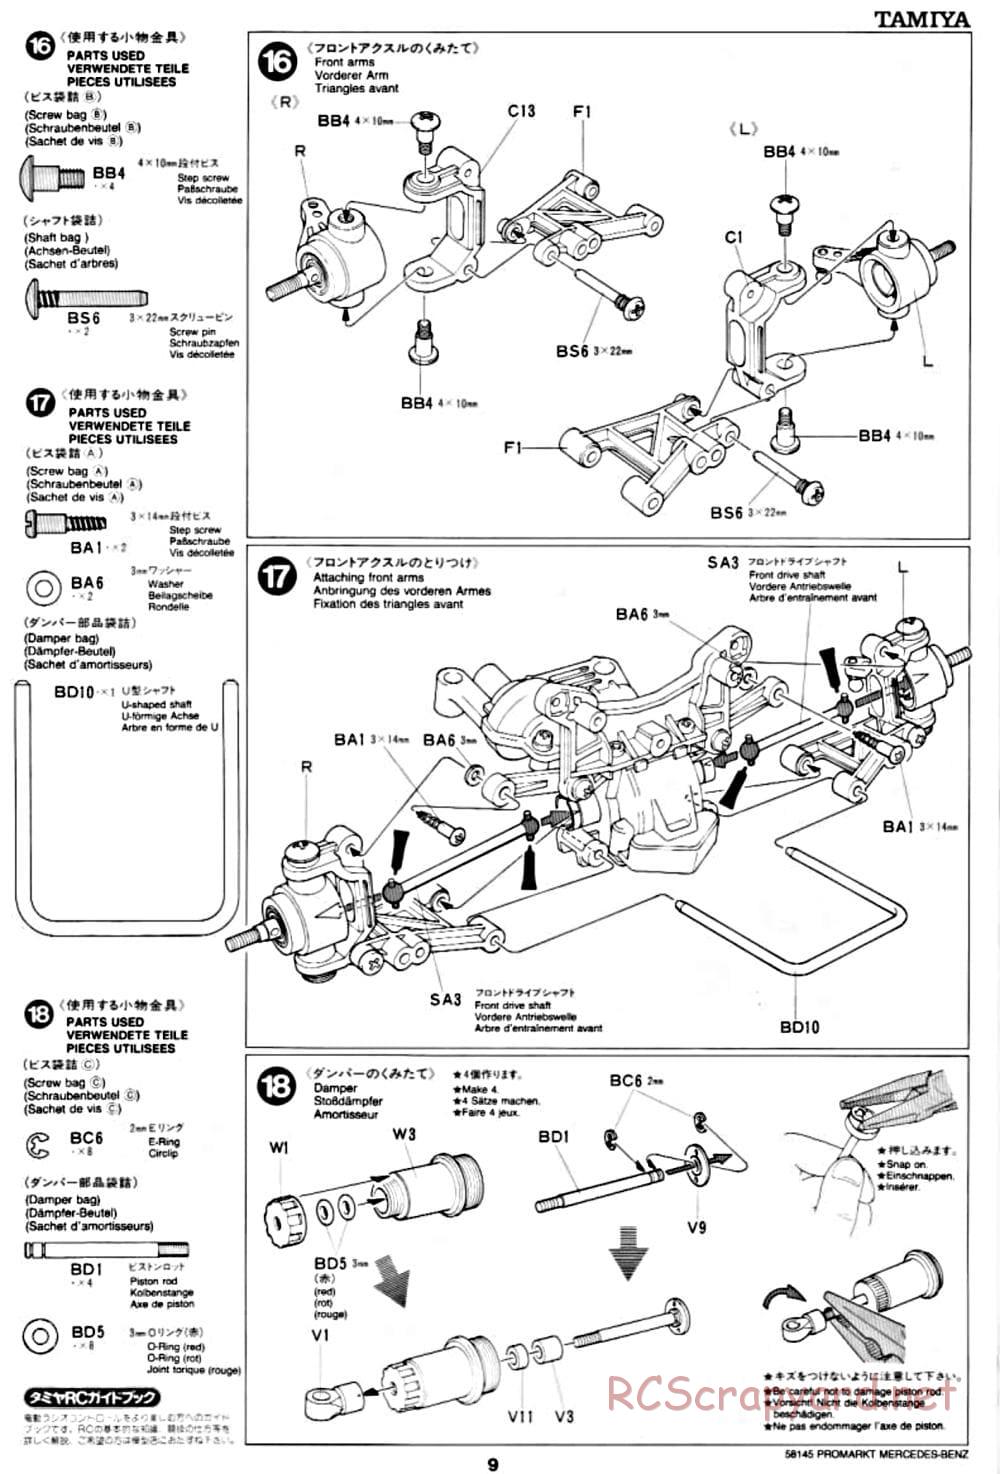 Tamiya - ProMarkt-Zakspeed AMG Mercedes C-Class DTM - TA-02 Chassis - Manual - Page 9